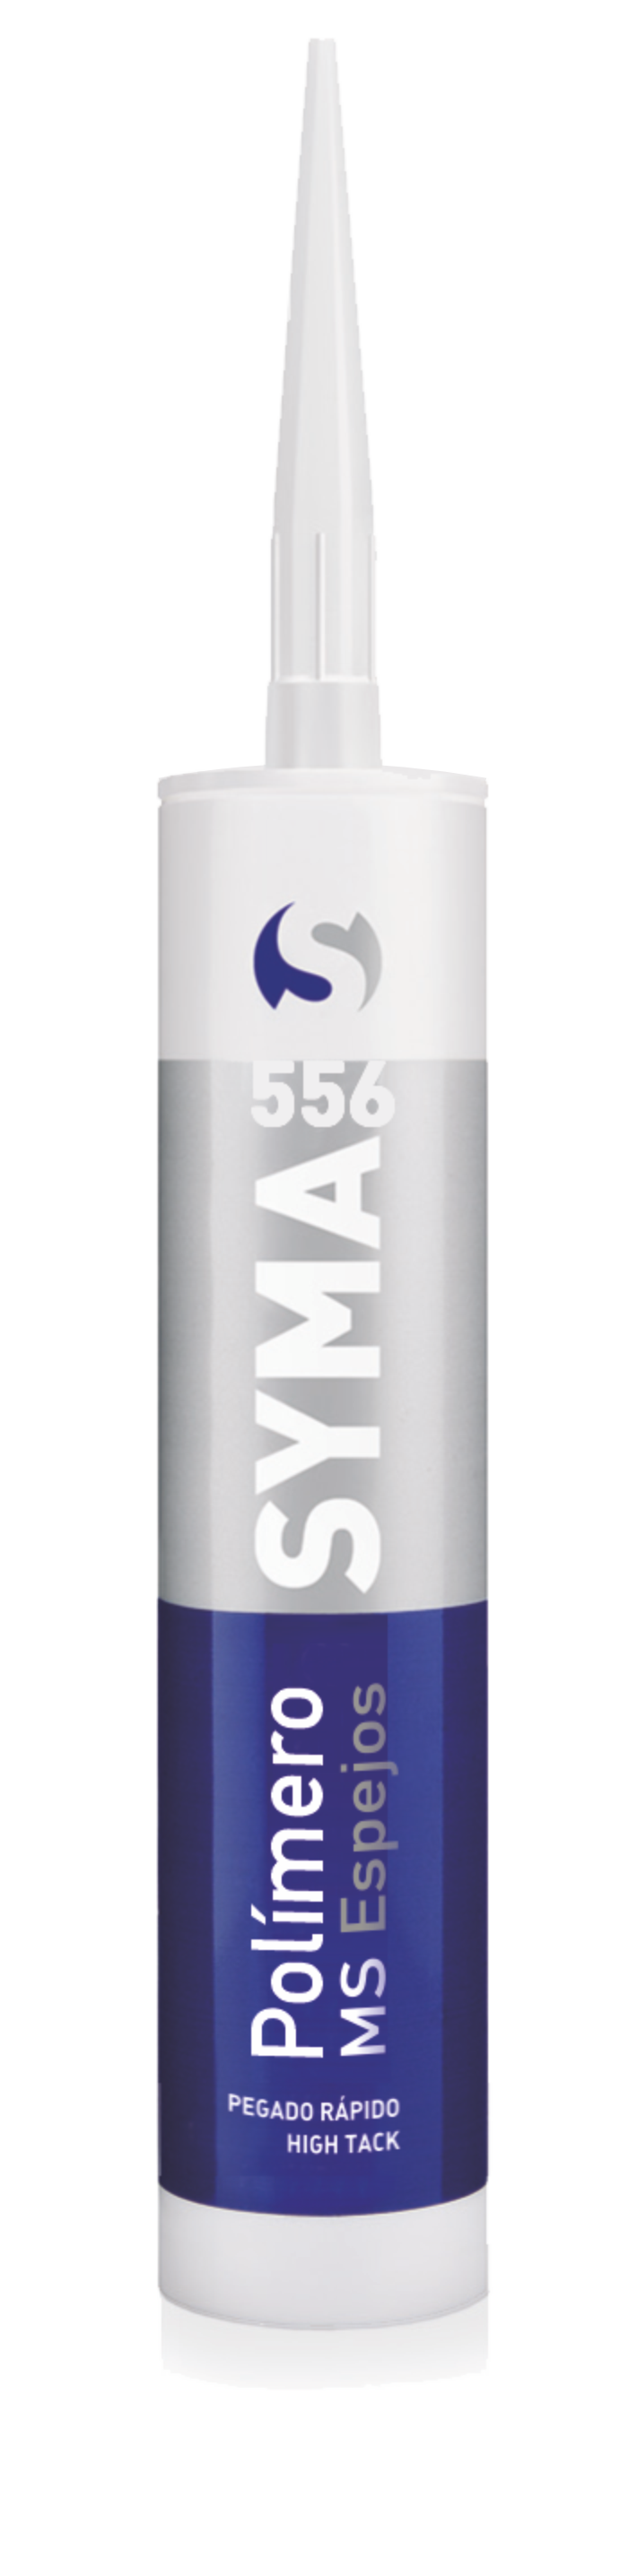 Syma 556